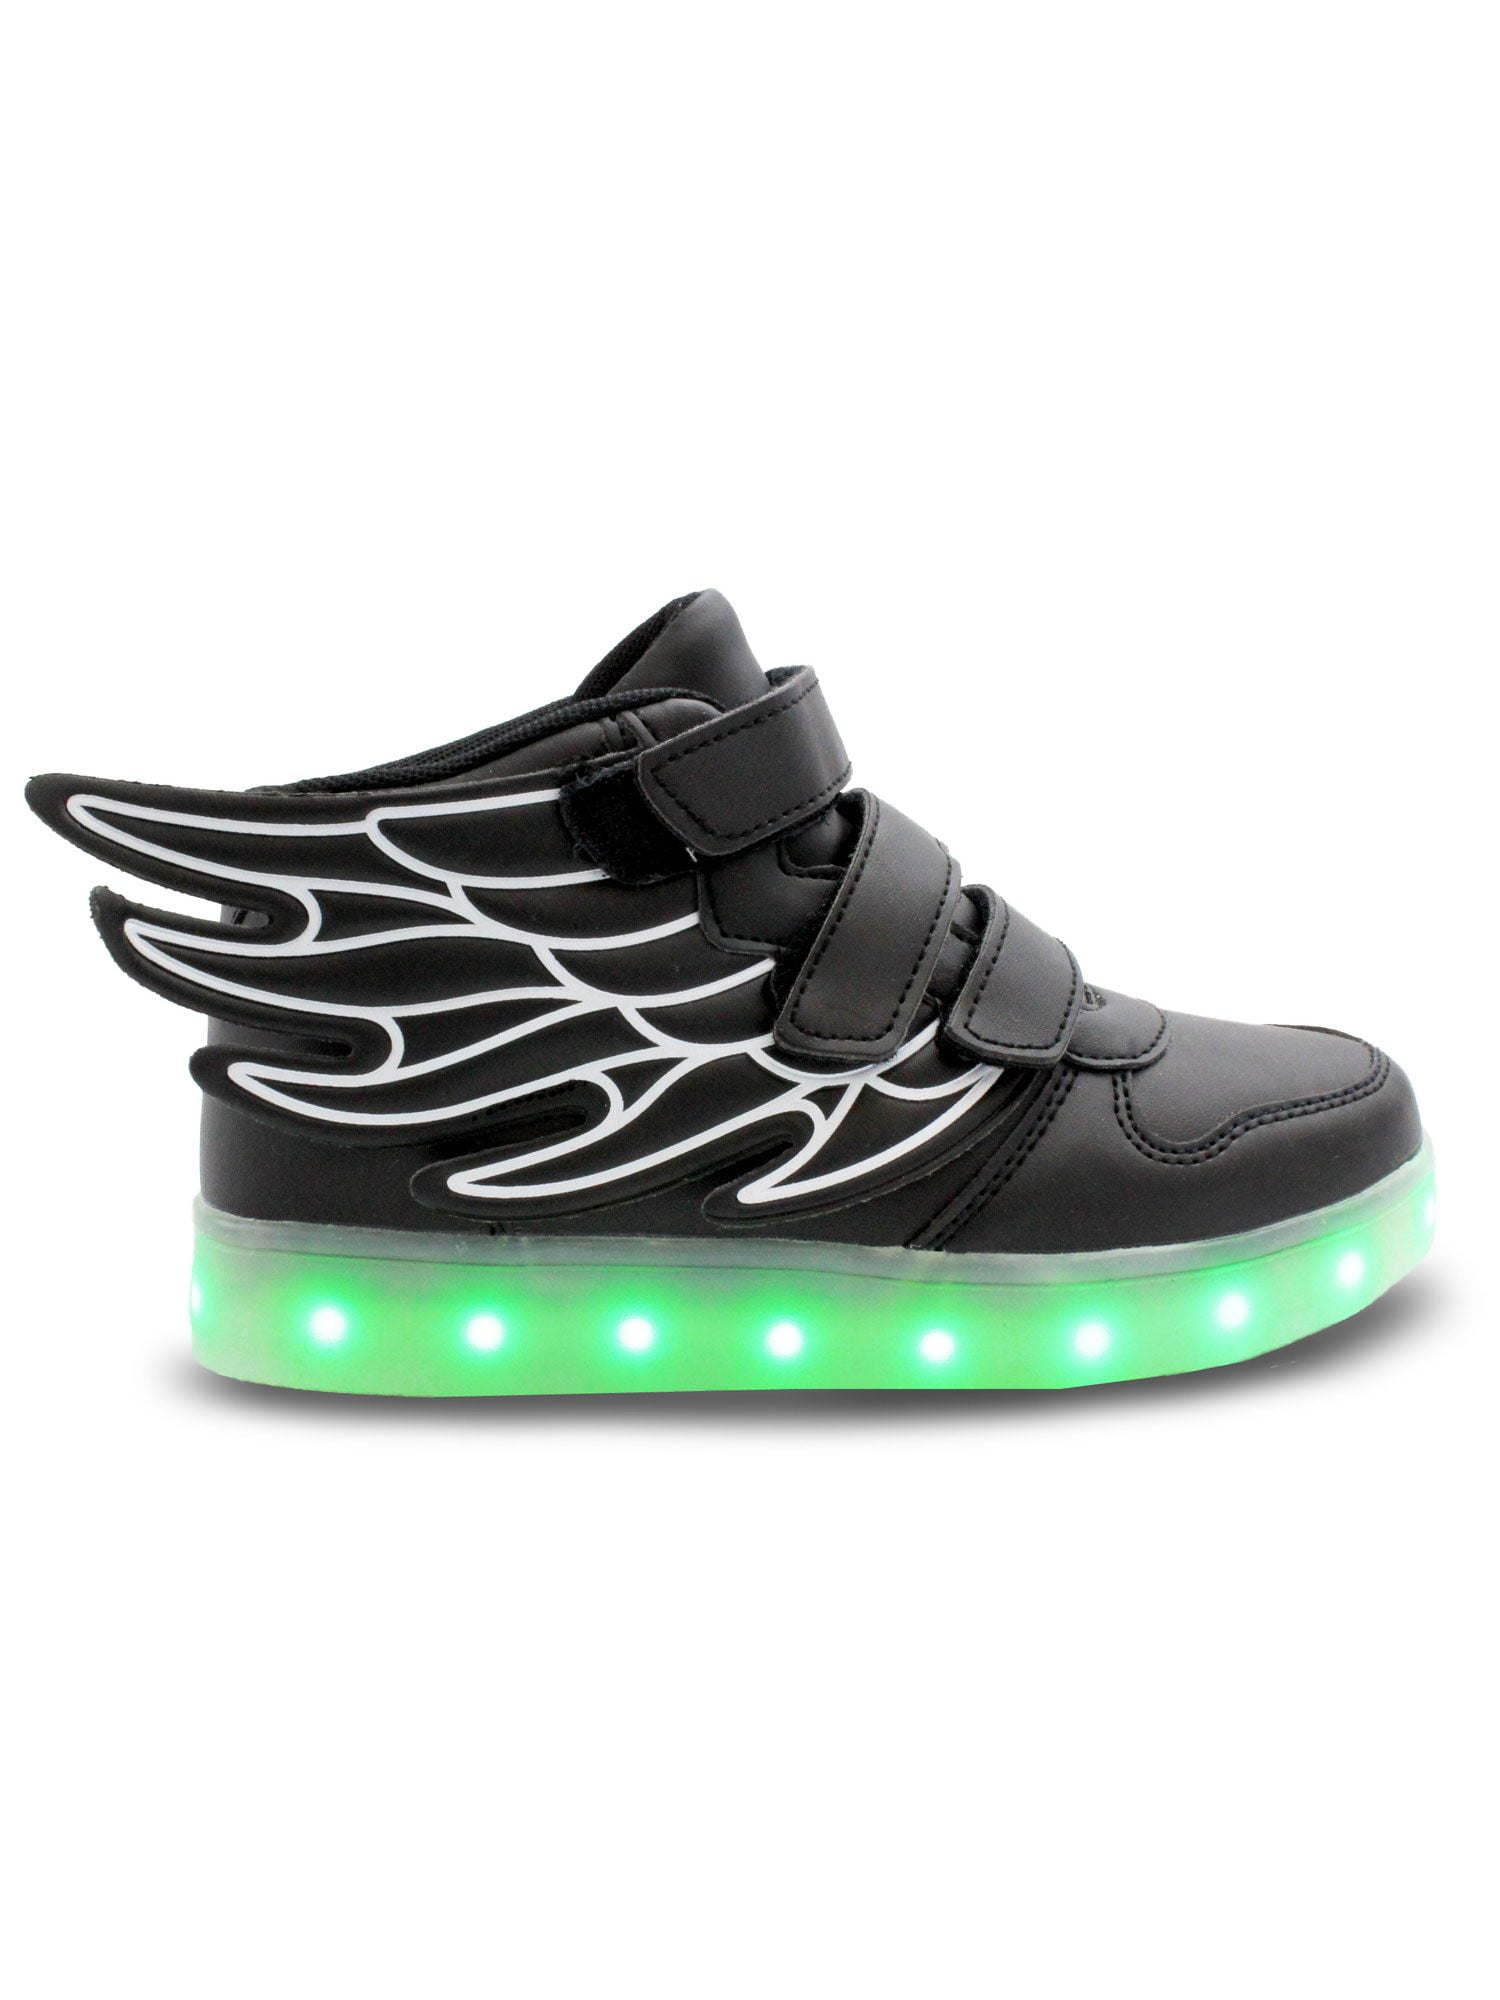 Family Smiles LED Light Up Wings Sneakers Kids High Top Boys Girls ...